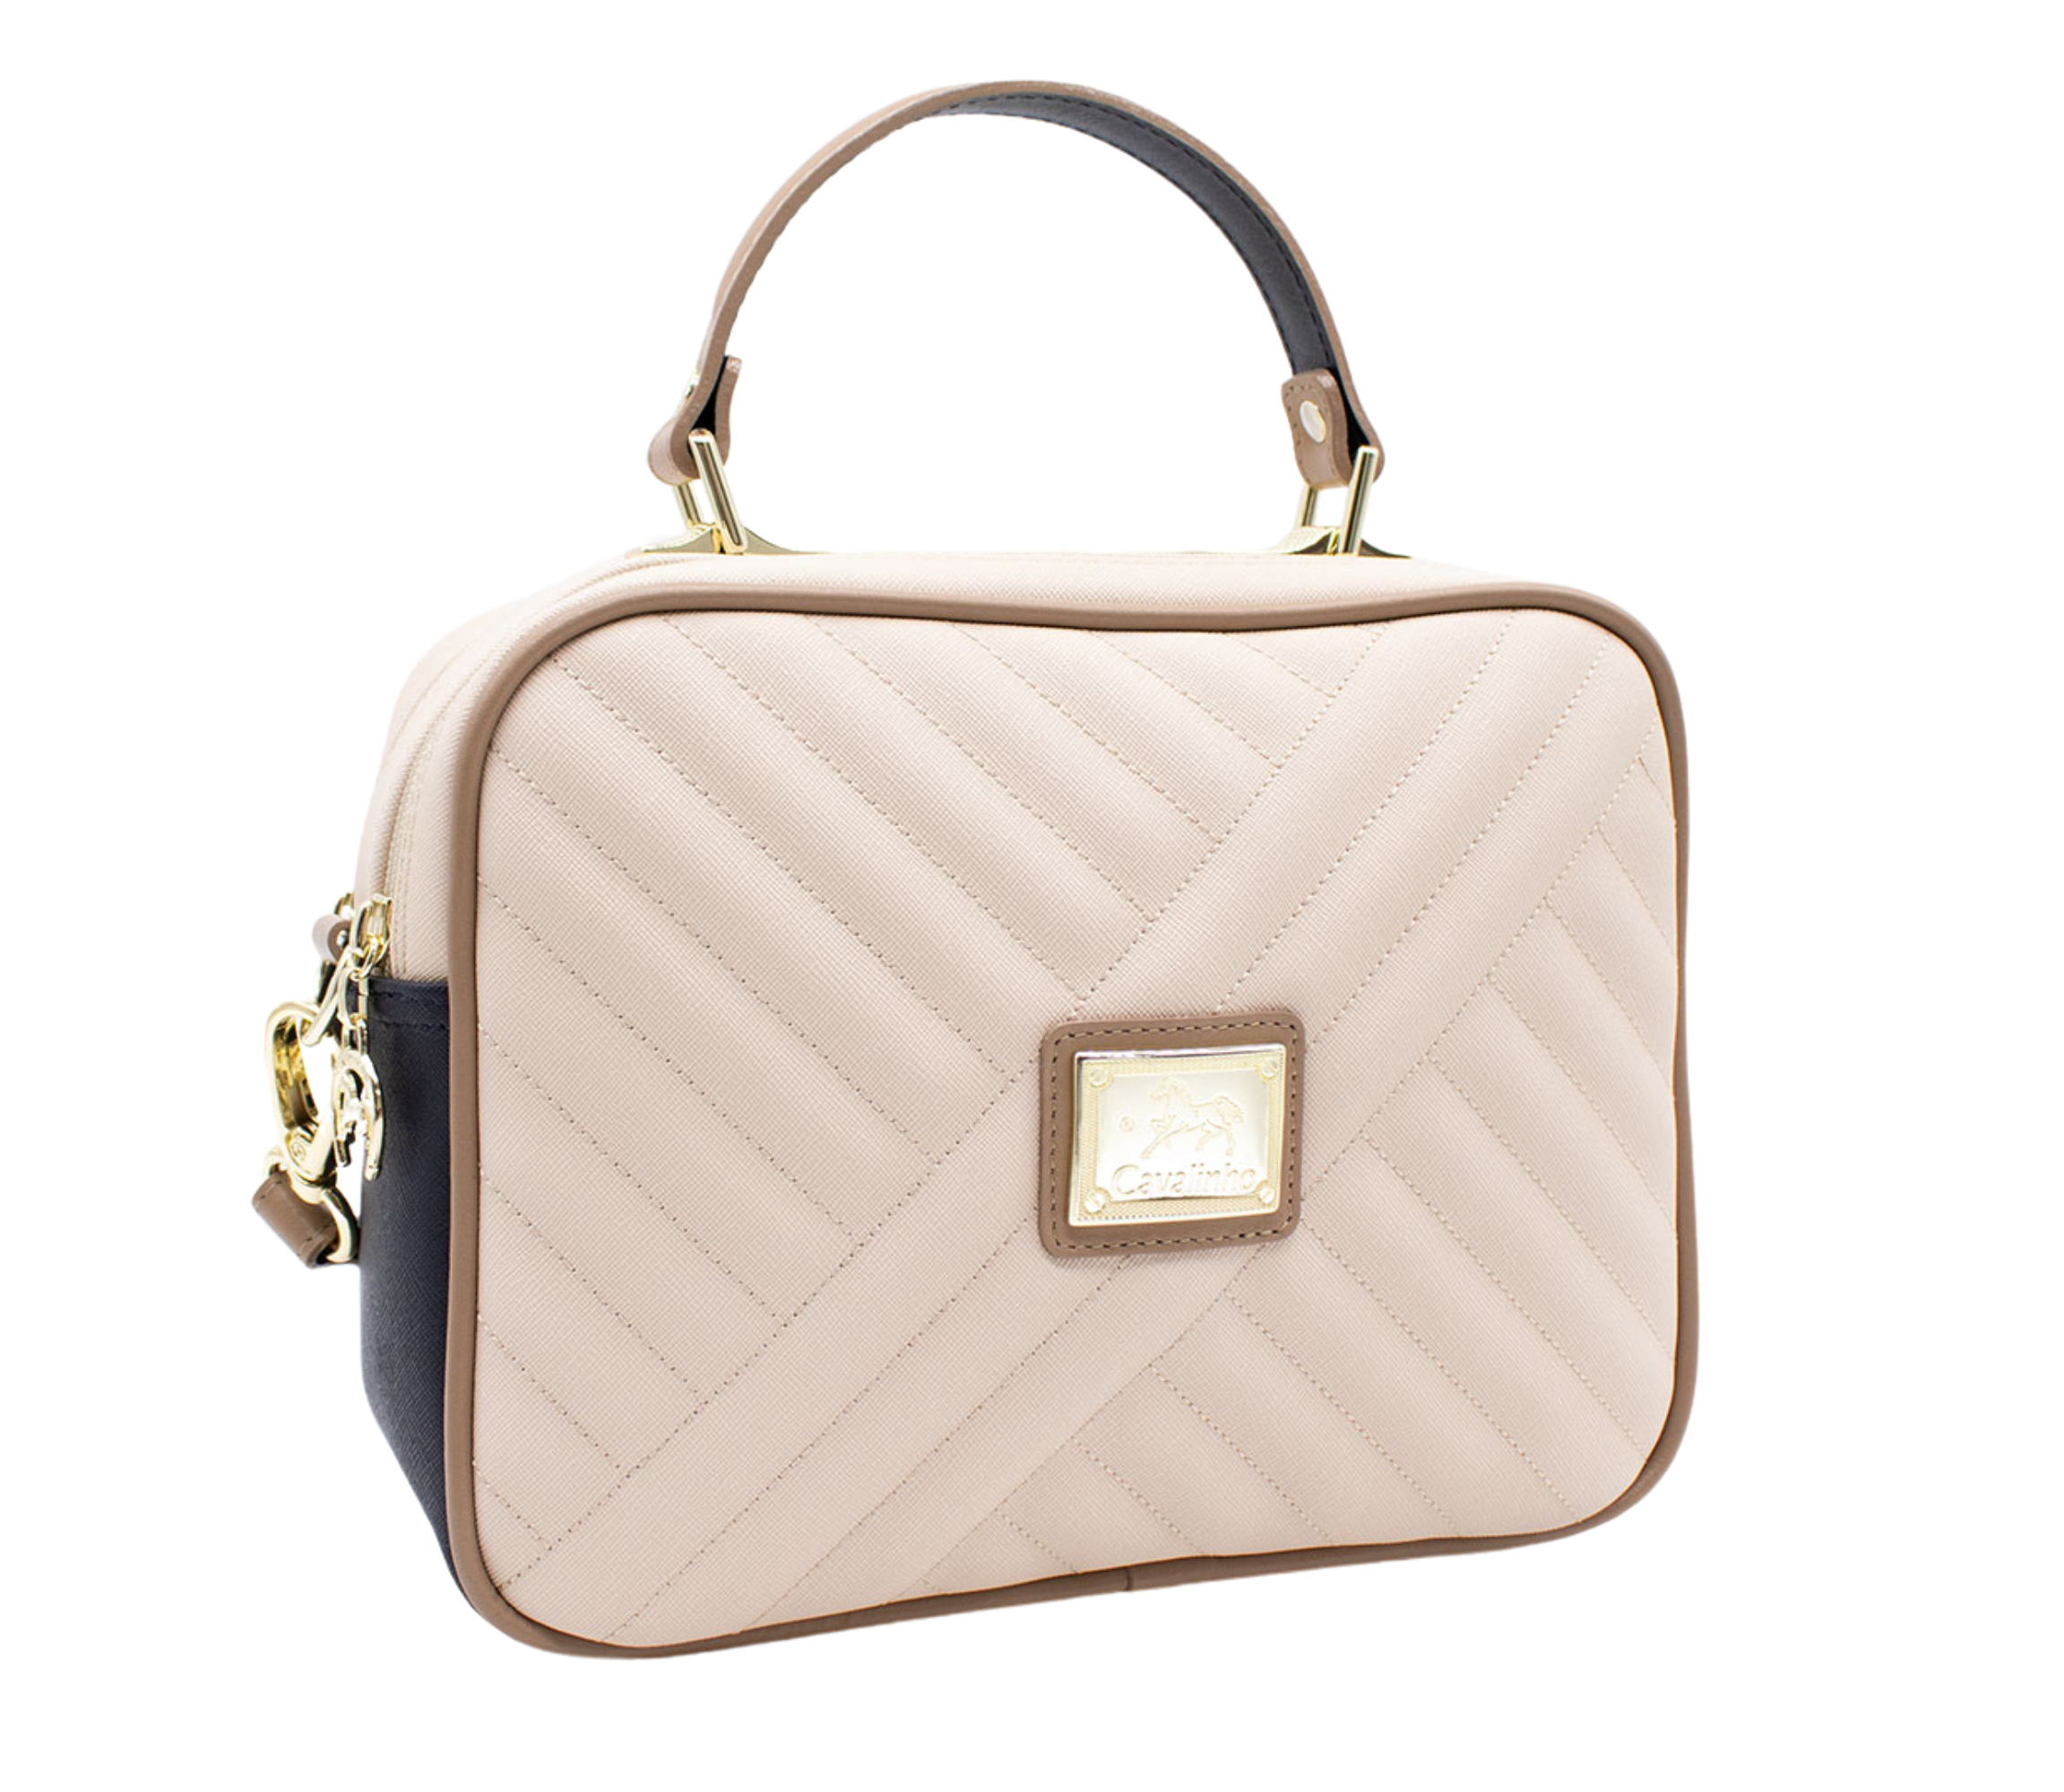 Cavalinho Charming Handbag SKU 18470186.22 #color_Navy / Tan / Beige